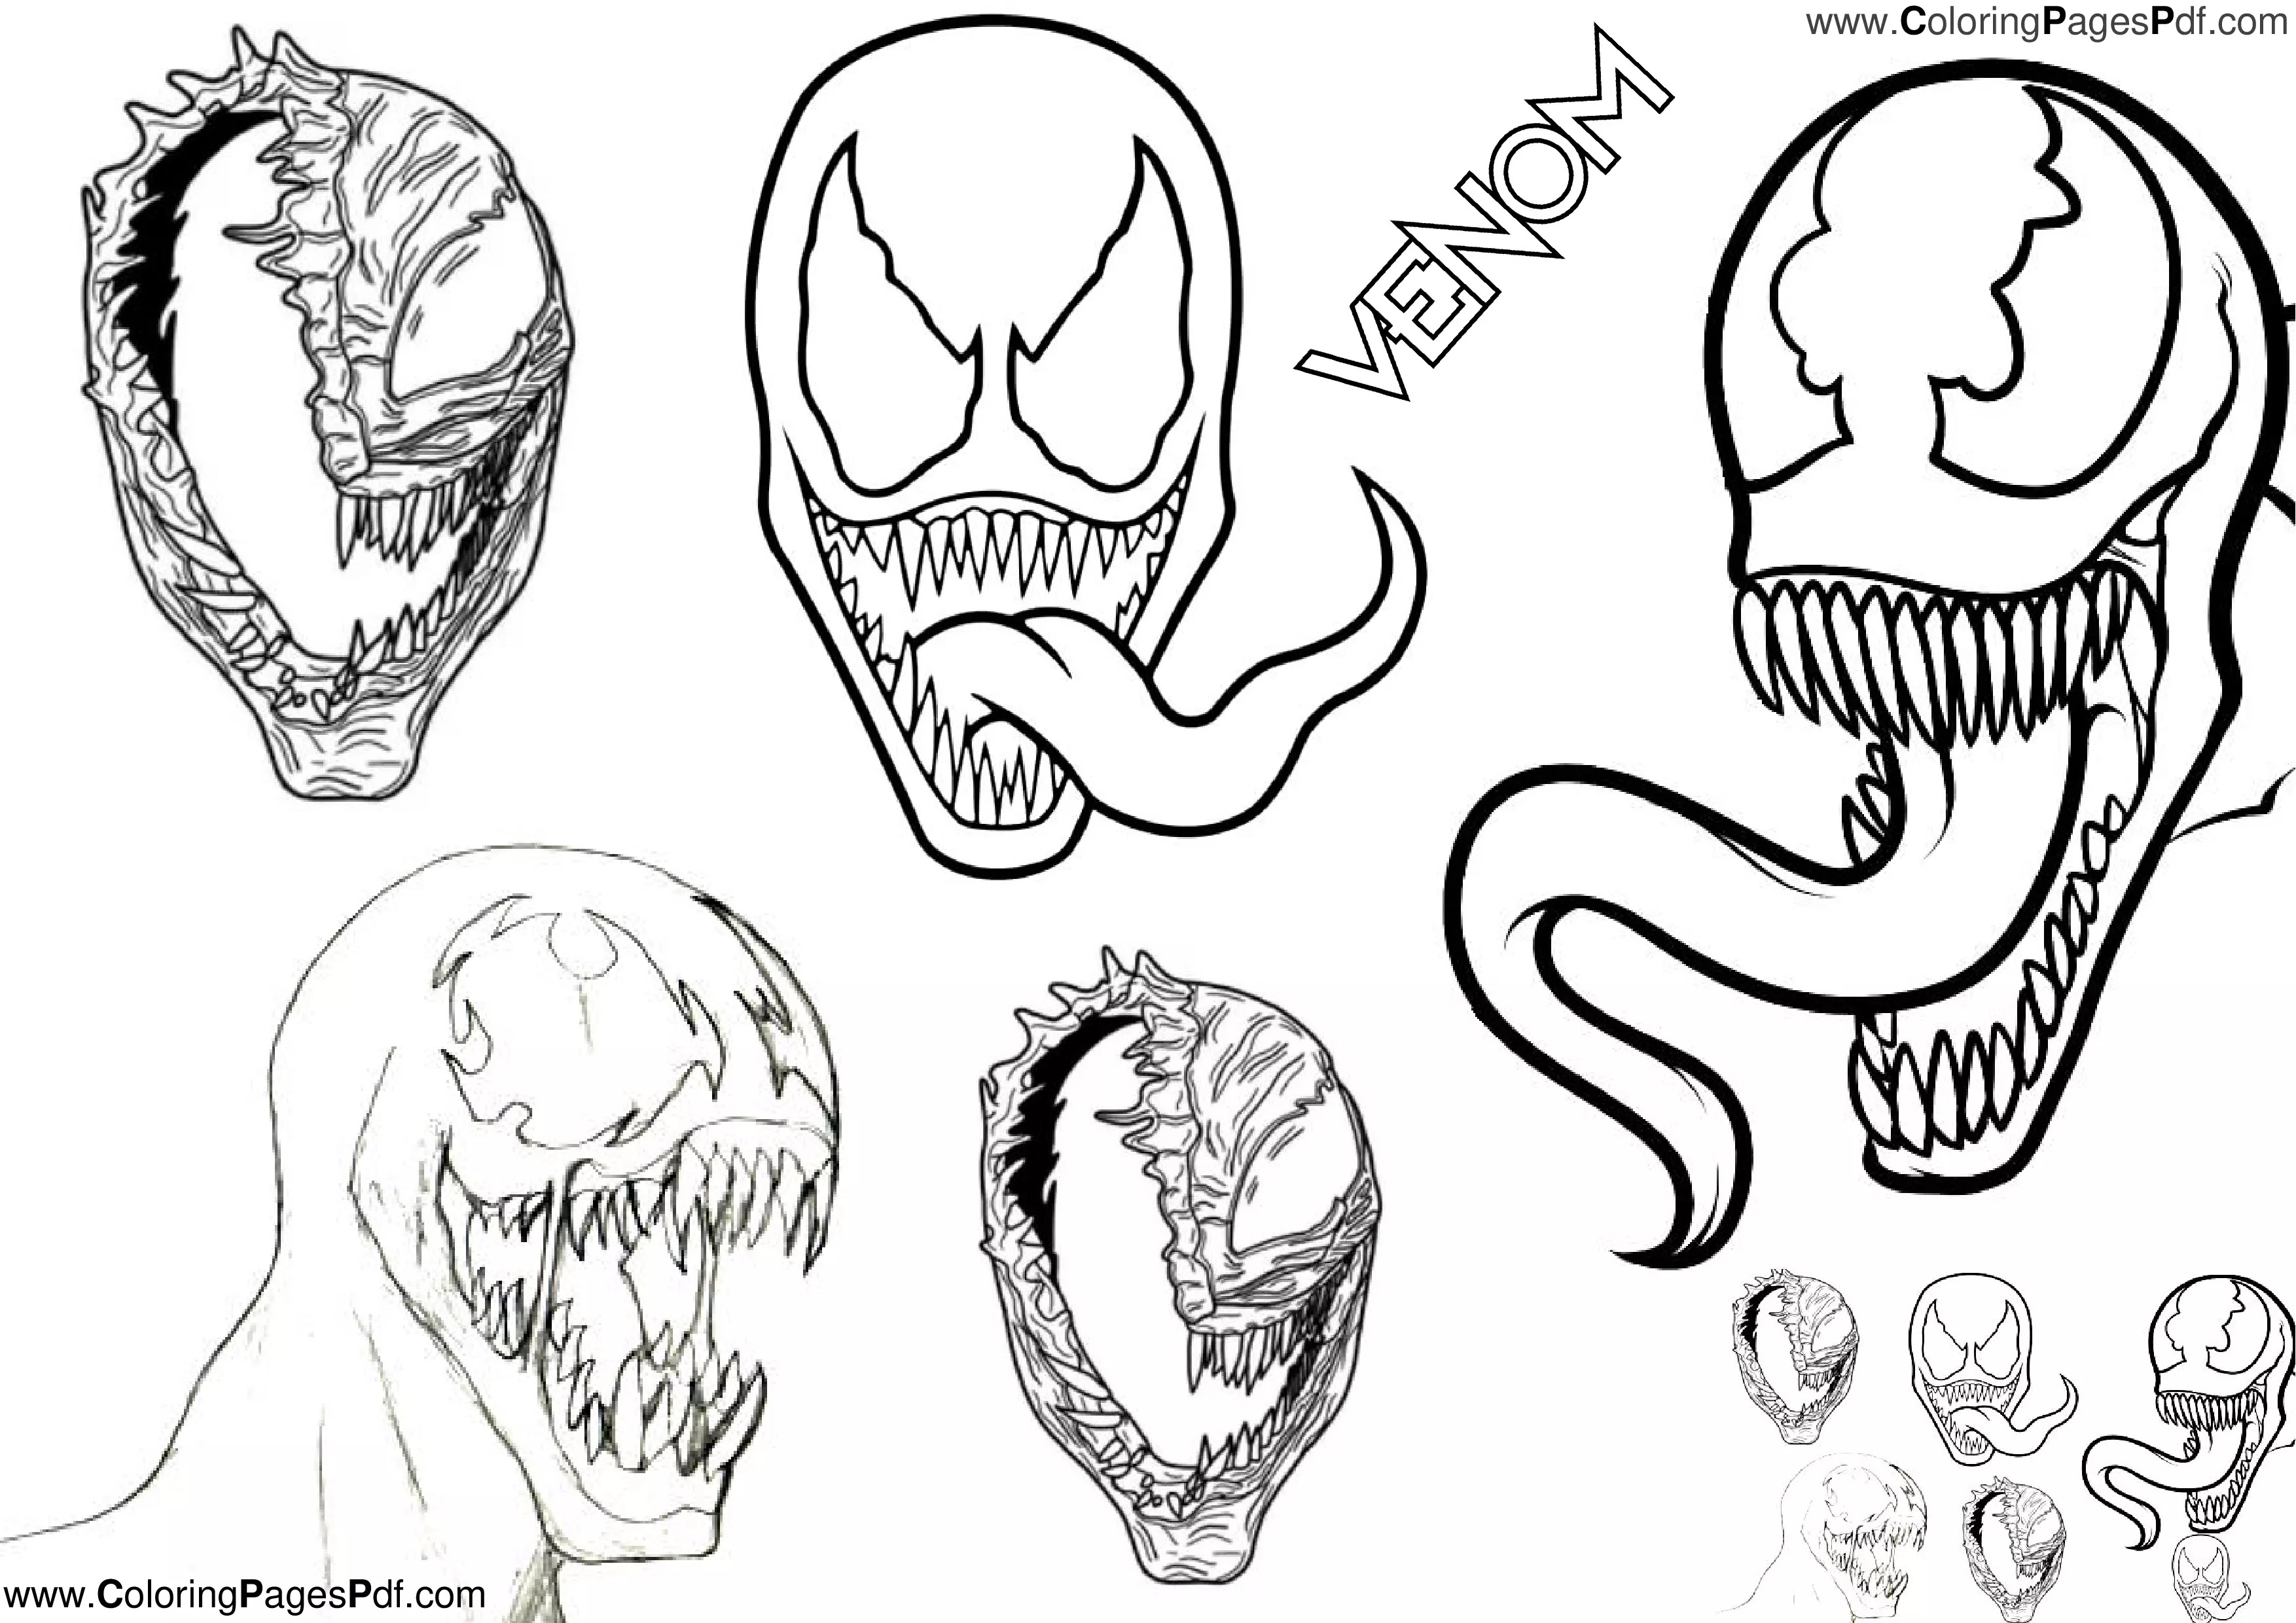 Venom Face coloring pages